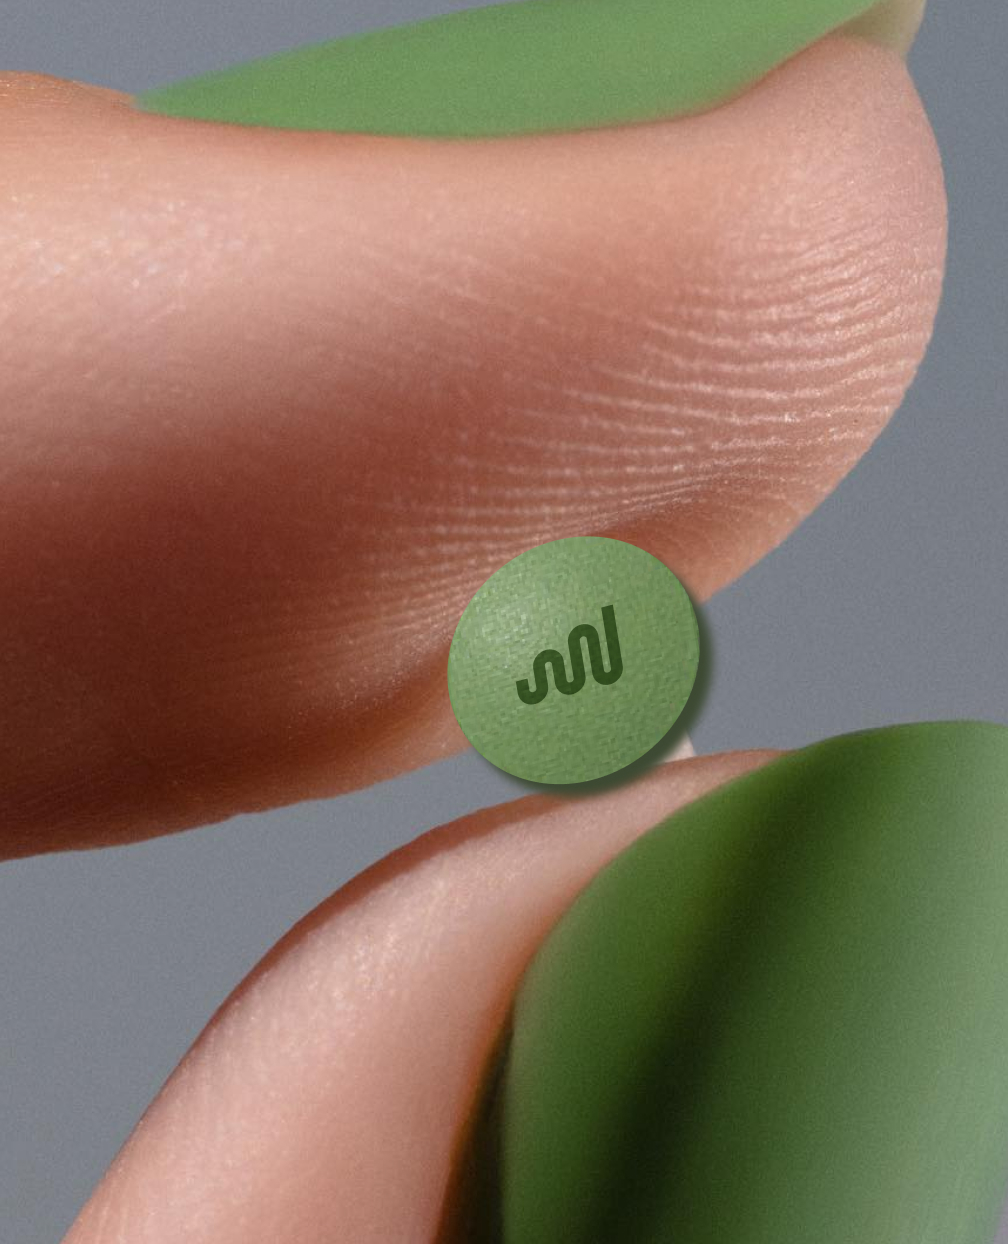 Fingers holding prescription pill